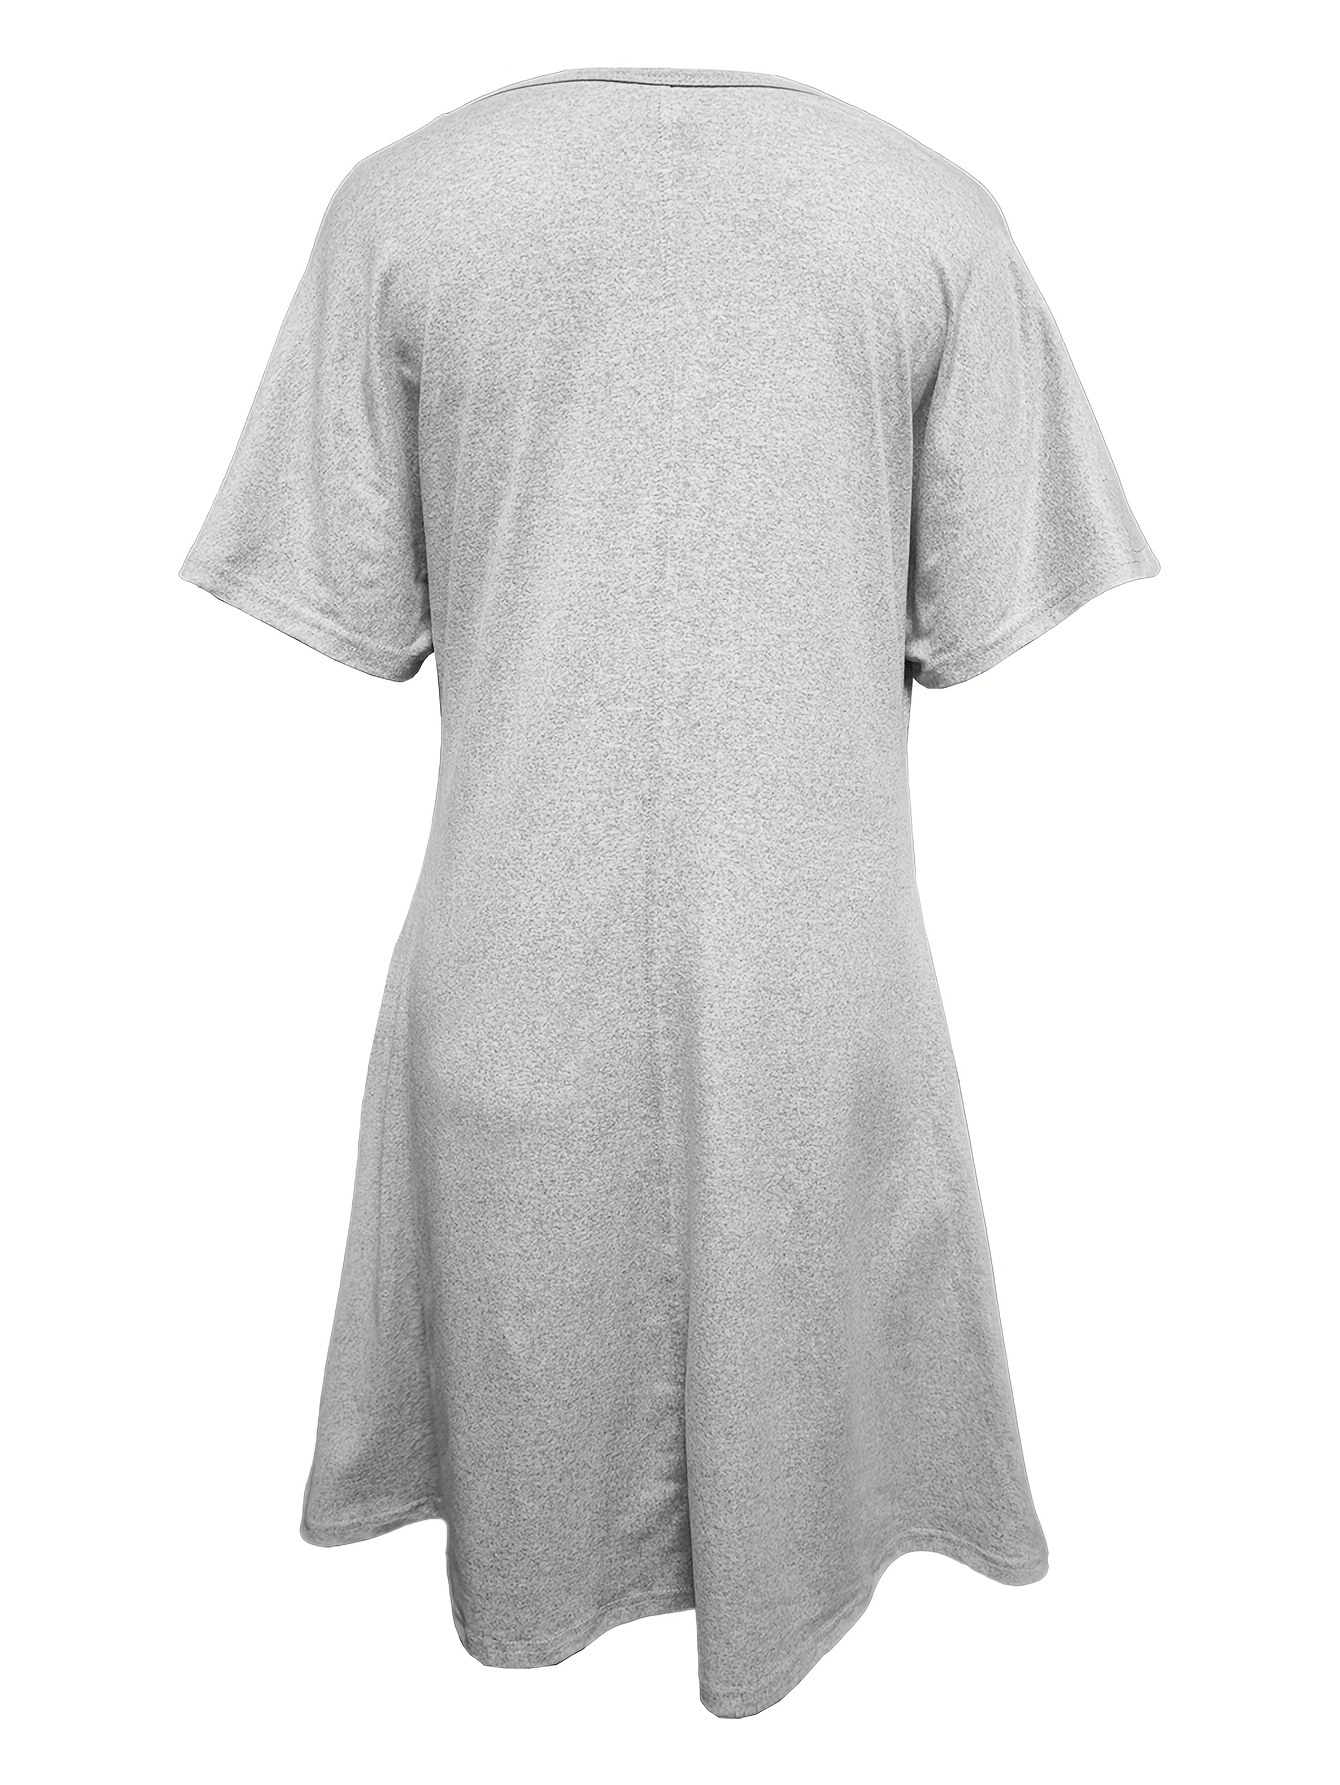 Joy To The World  Women's Christian Pajama Dress claimedbygoddesigns